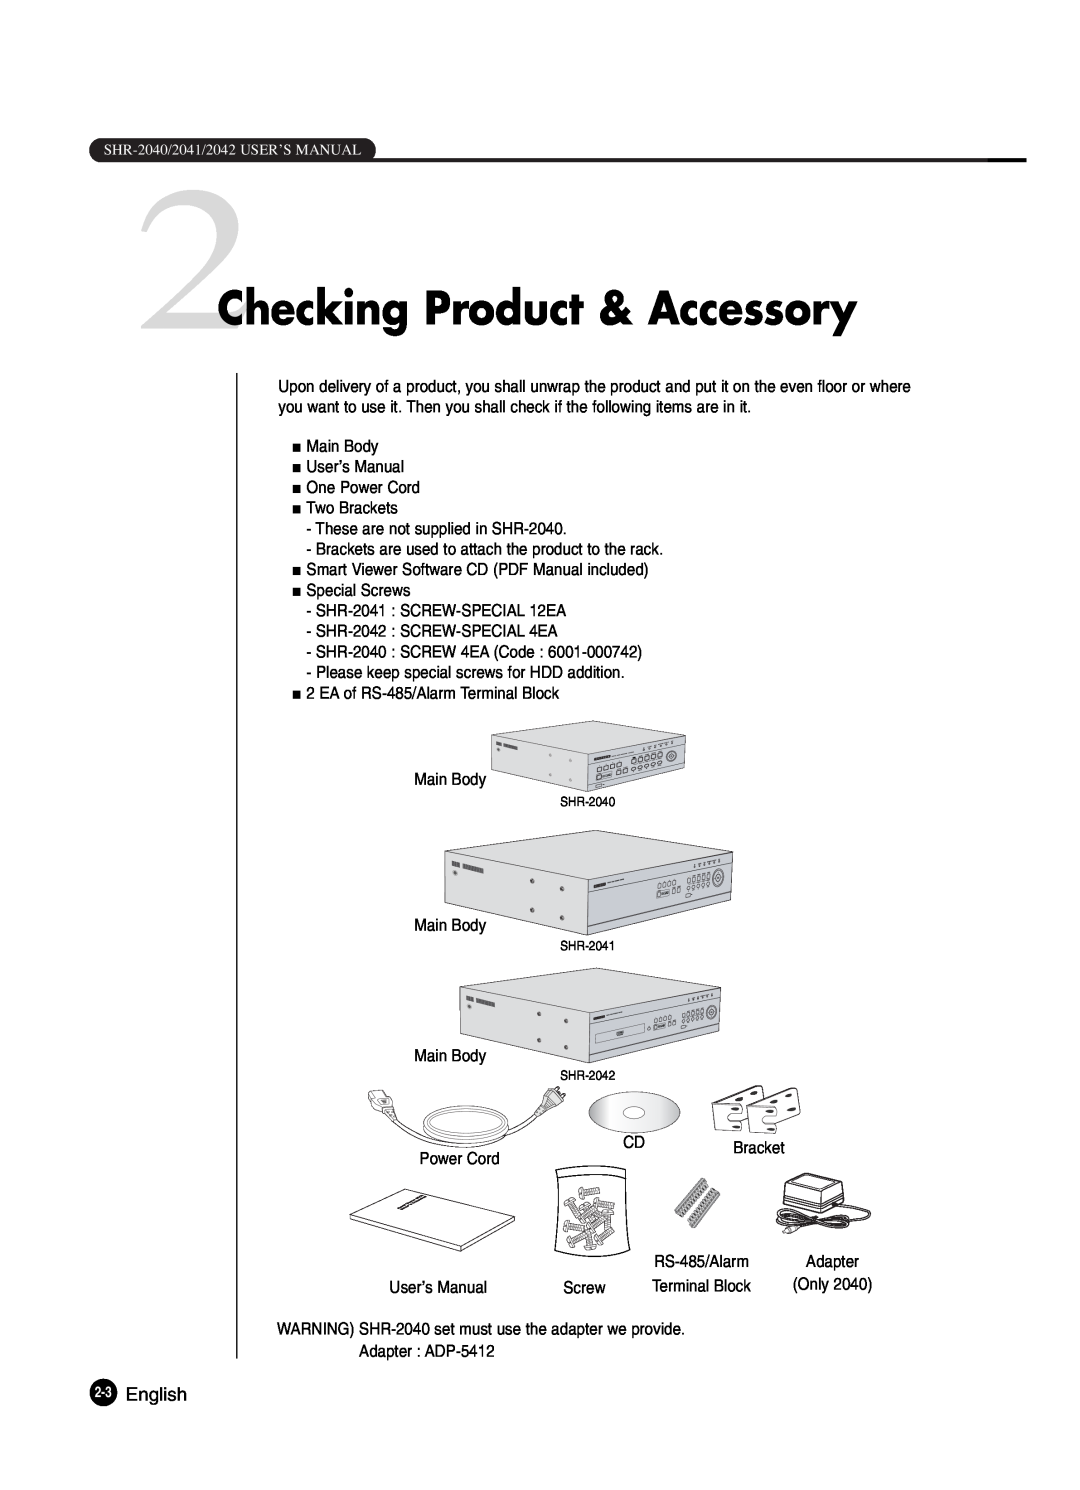 Samsung SHR-2042P250, SHR-2040P250 manual 2Checking Product & Accessory, English 